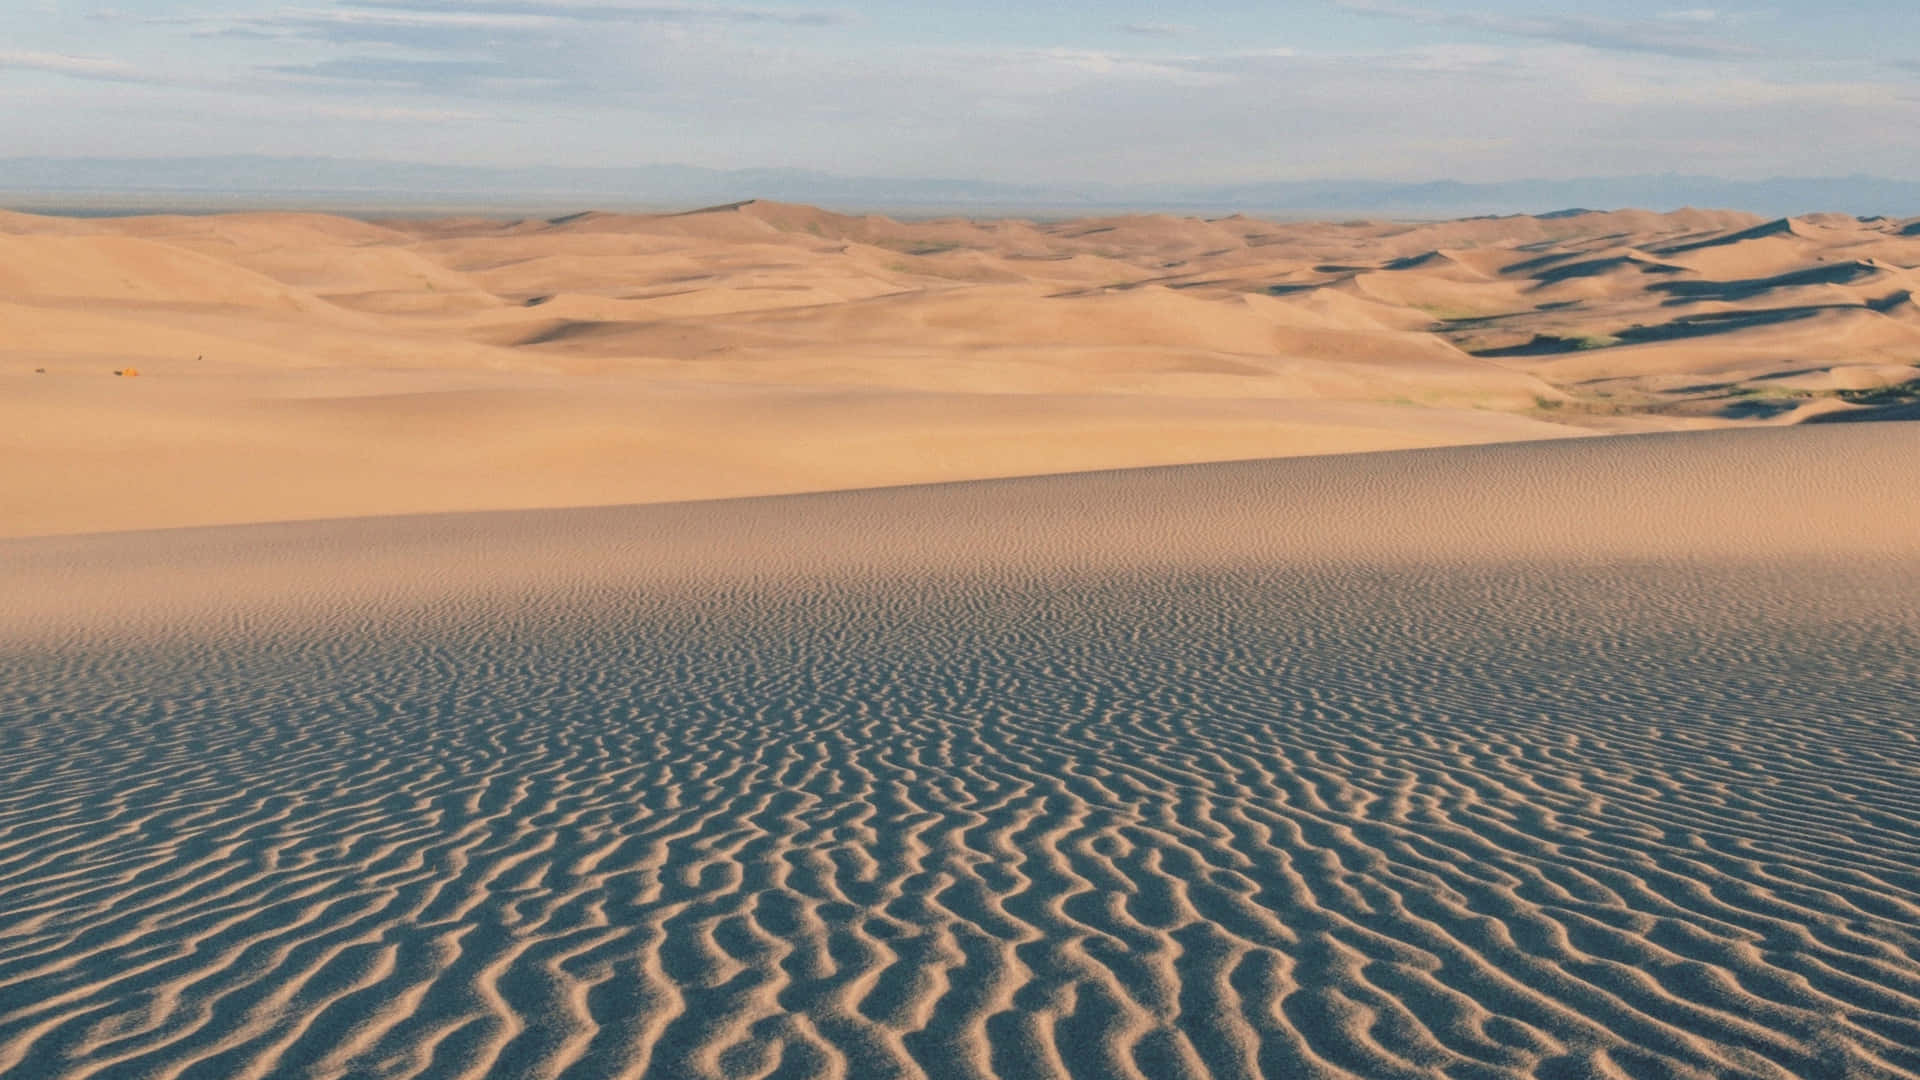 Explore the dizzying beauty of the deserts of Arrakis